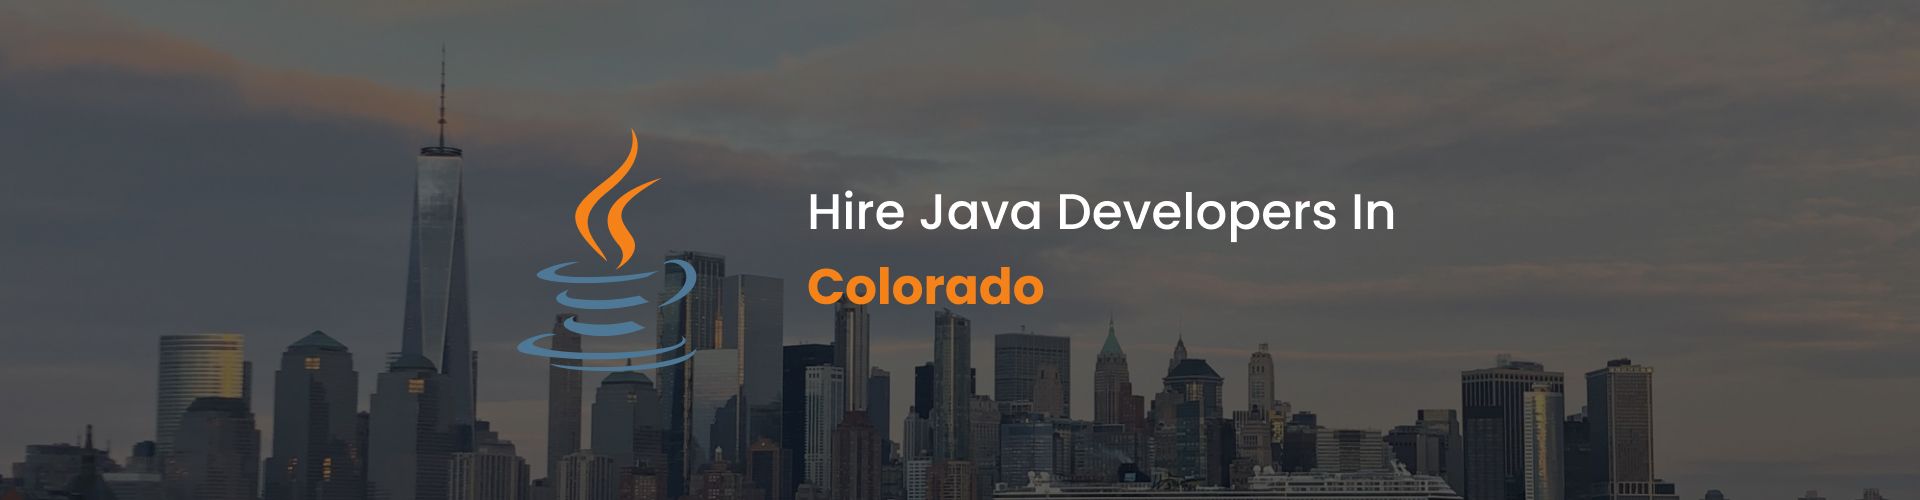 hire java developers in colorado